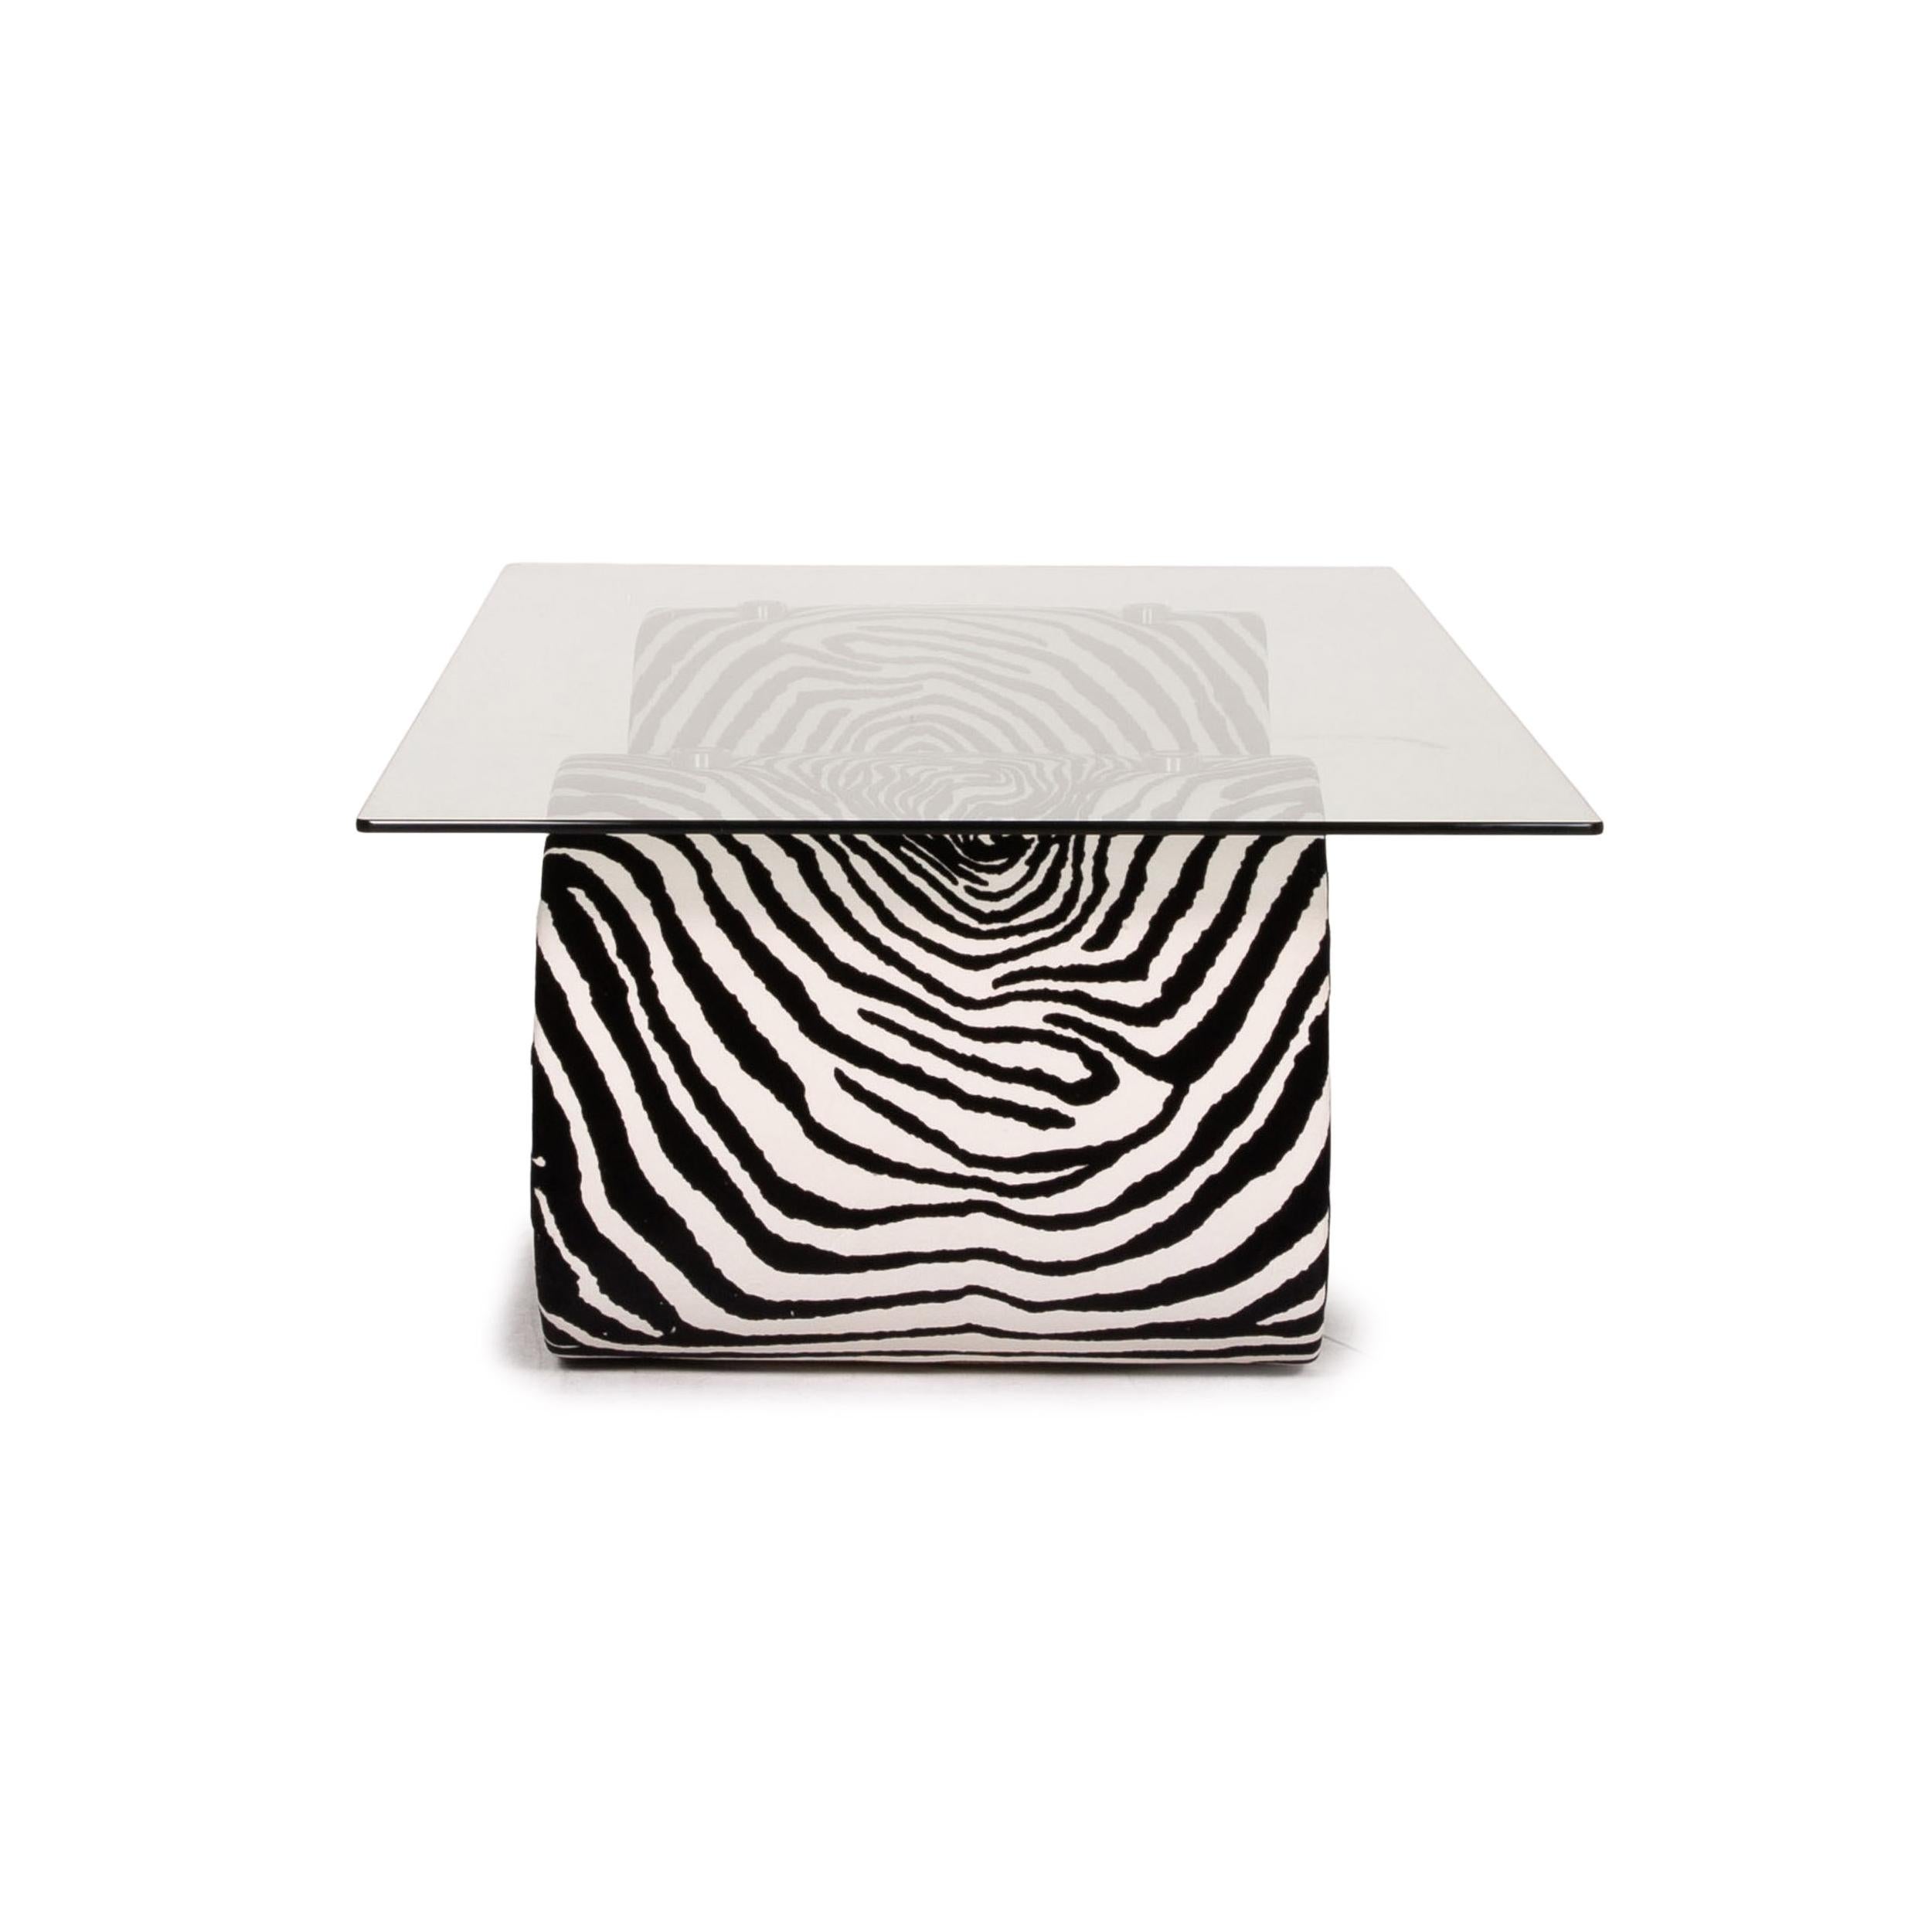 Bretz Glass Velvet Fabric Coffee Table Zebra Pattern Black White In Good Condition For Sale In Cologne, DE